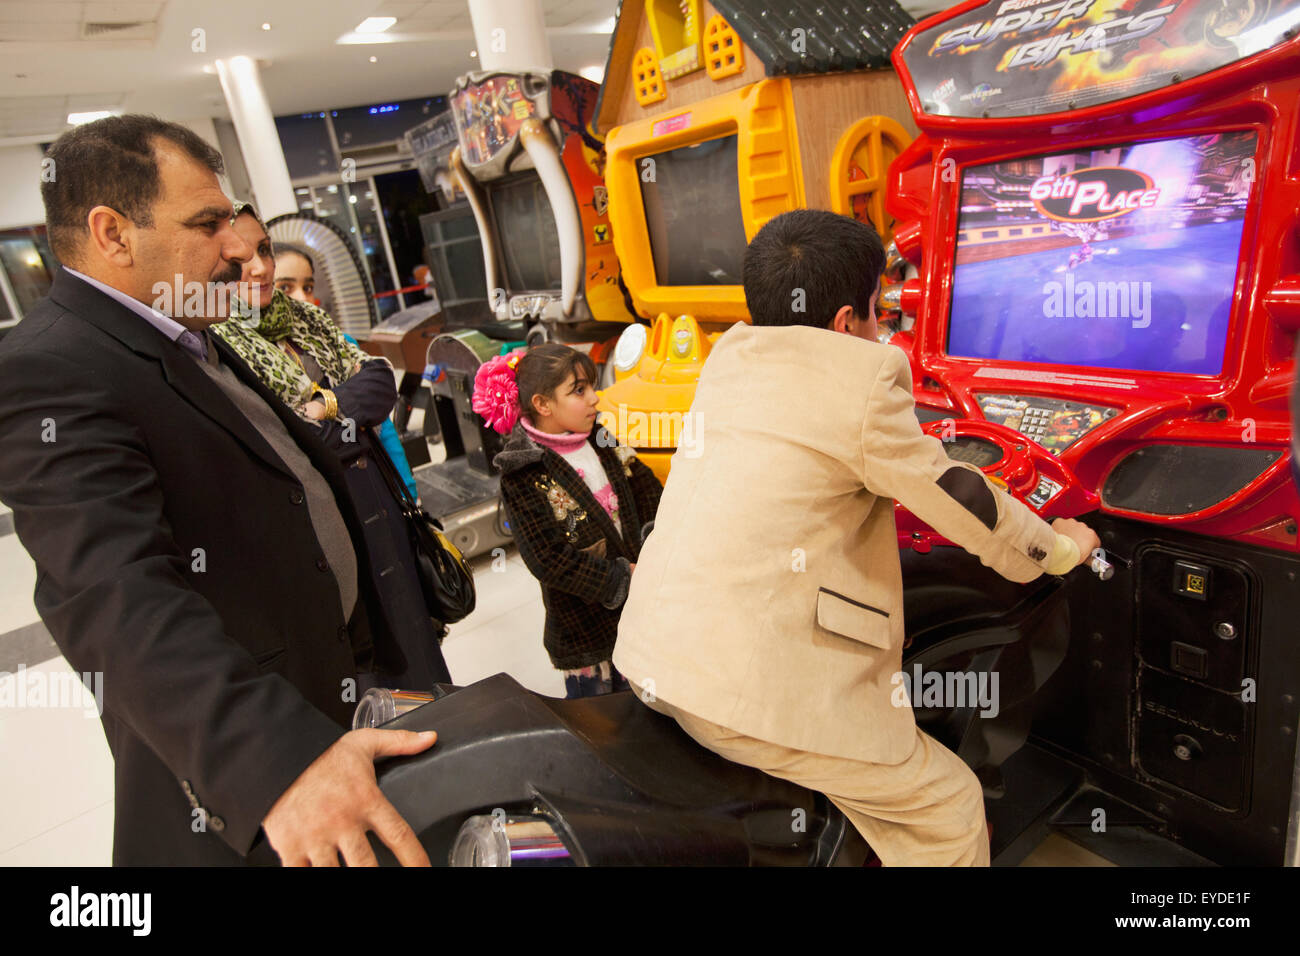 Arcade Games Inside The Family Mall Shopping Mall At Erbil, Iraqi Kurdistan, Iraq Stock Photo